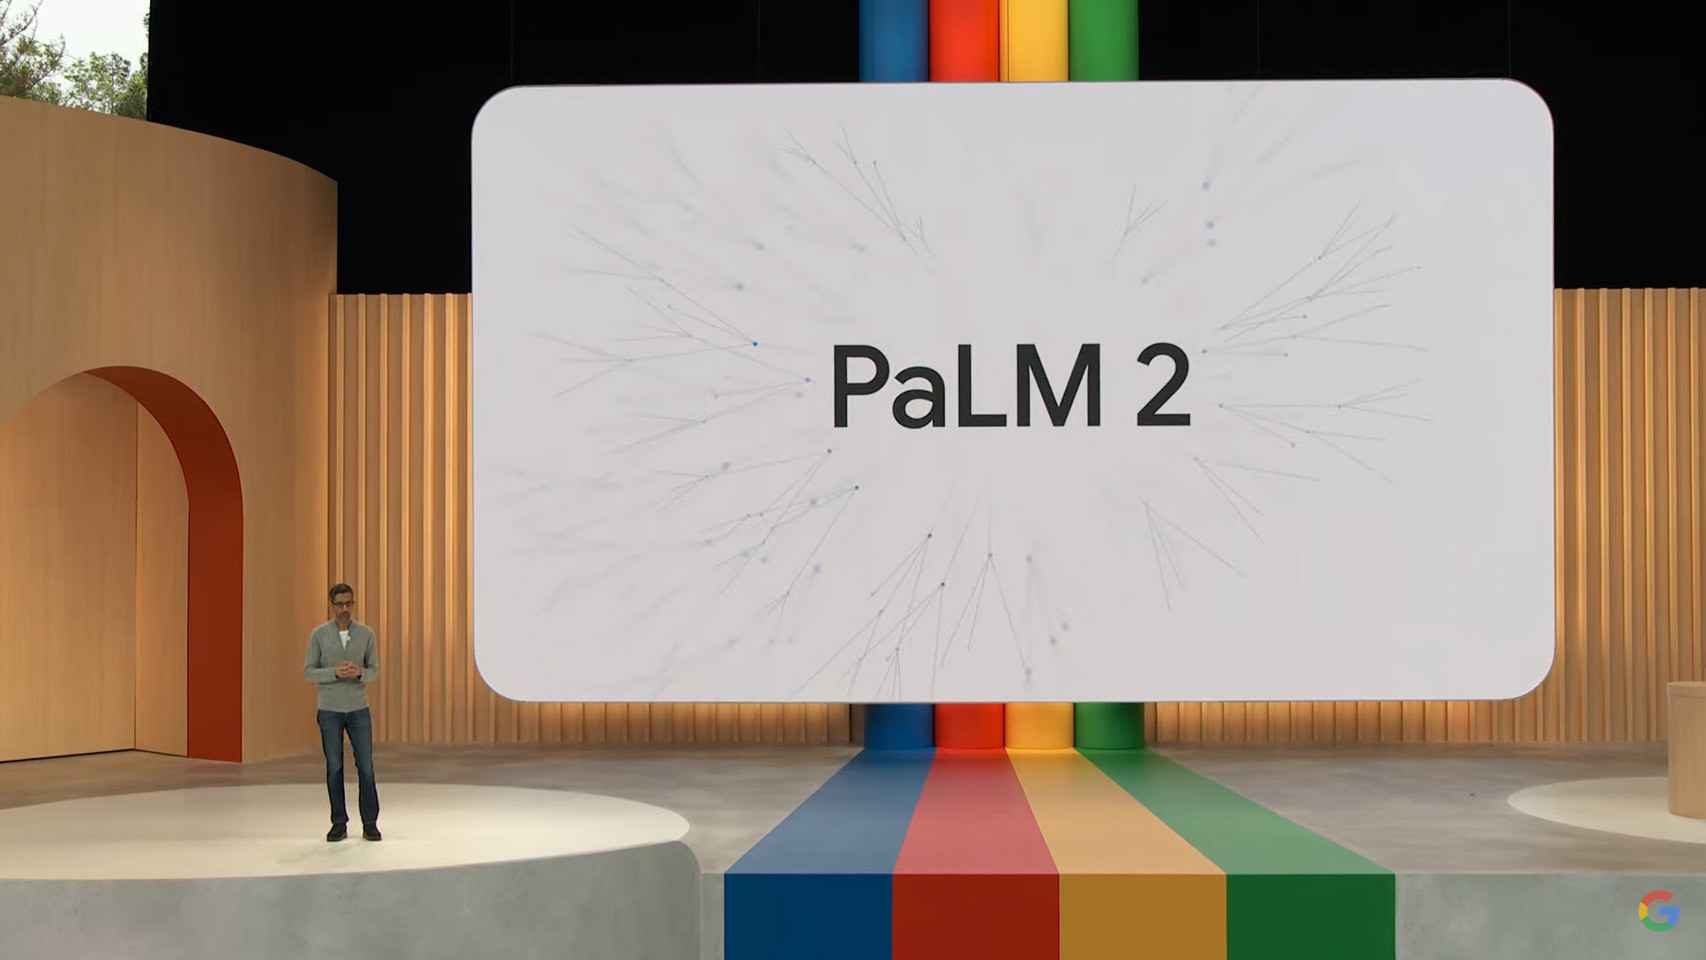 PaLM 2, el nuevo modelo de IA de Google